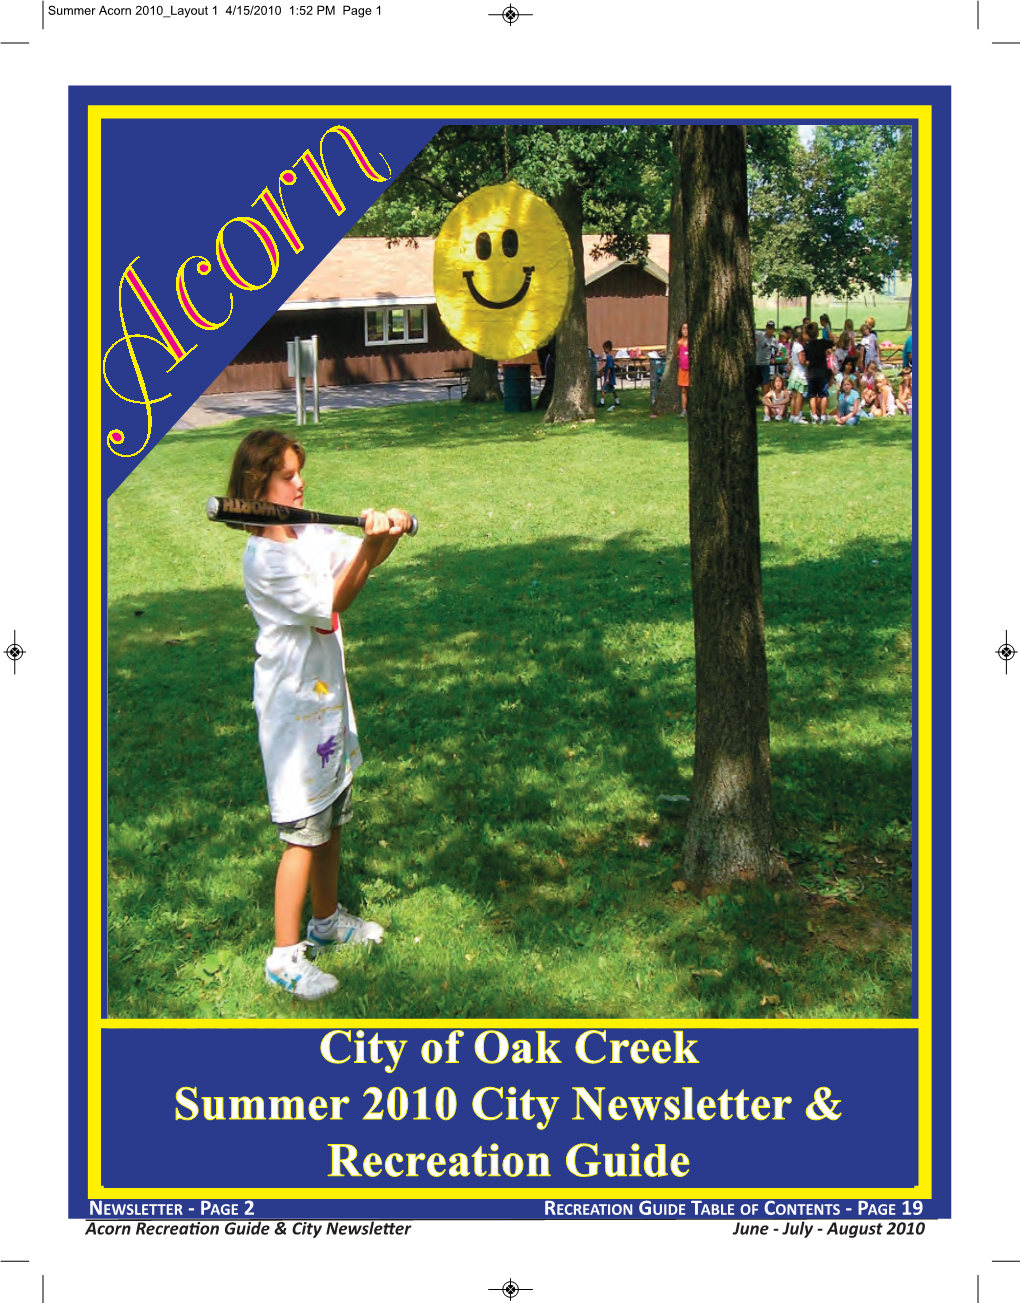 City of Oak Creek Summer 2010 City Newsletter & Recreation Guide